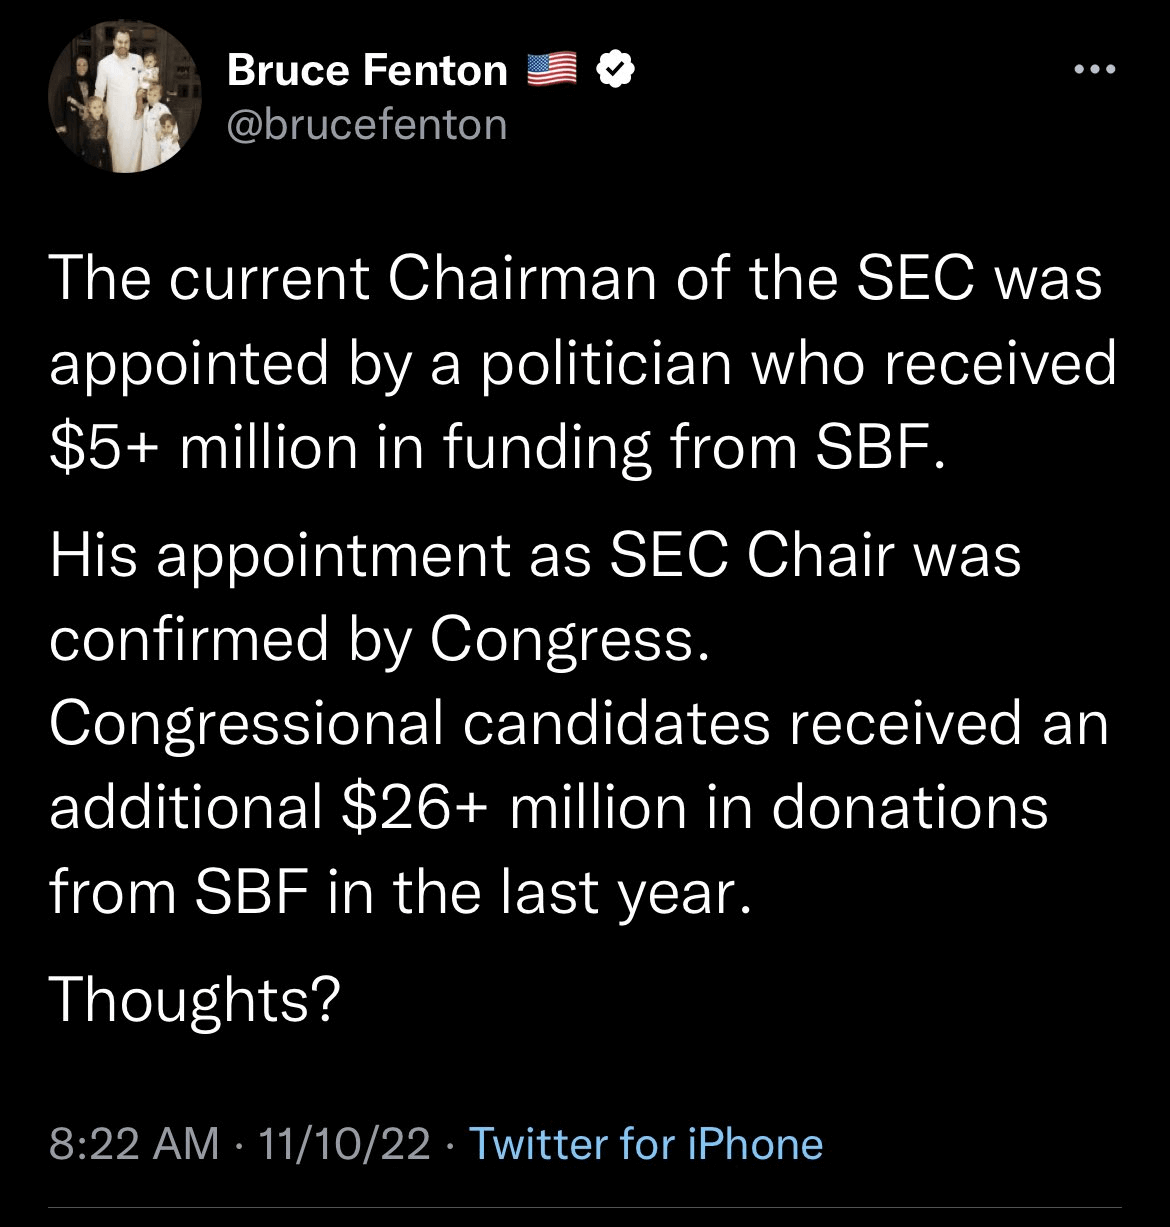 Bruce Fenton Tweet